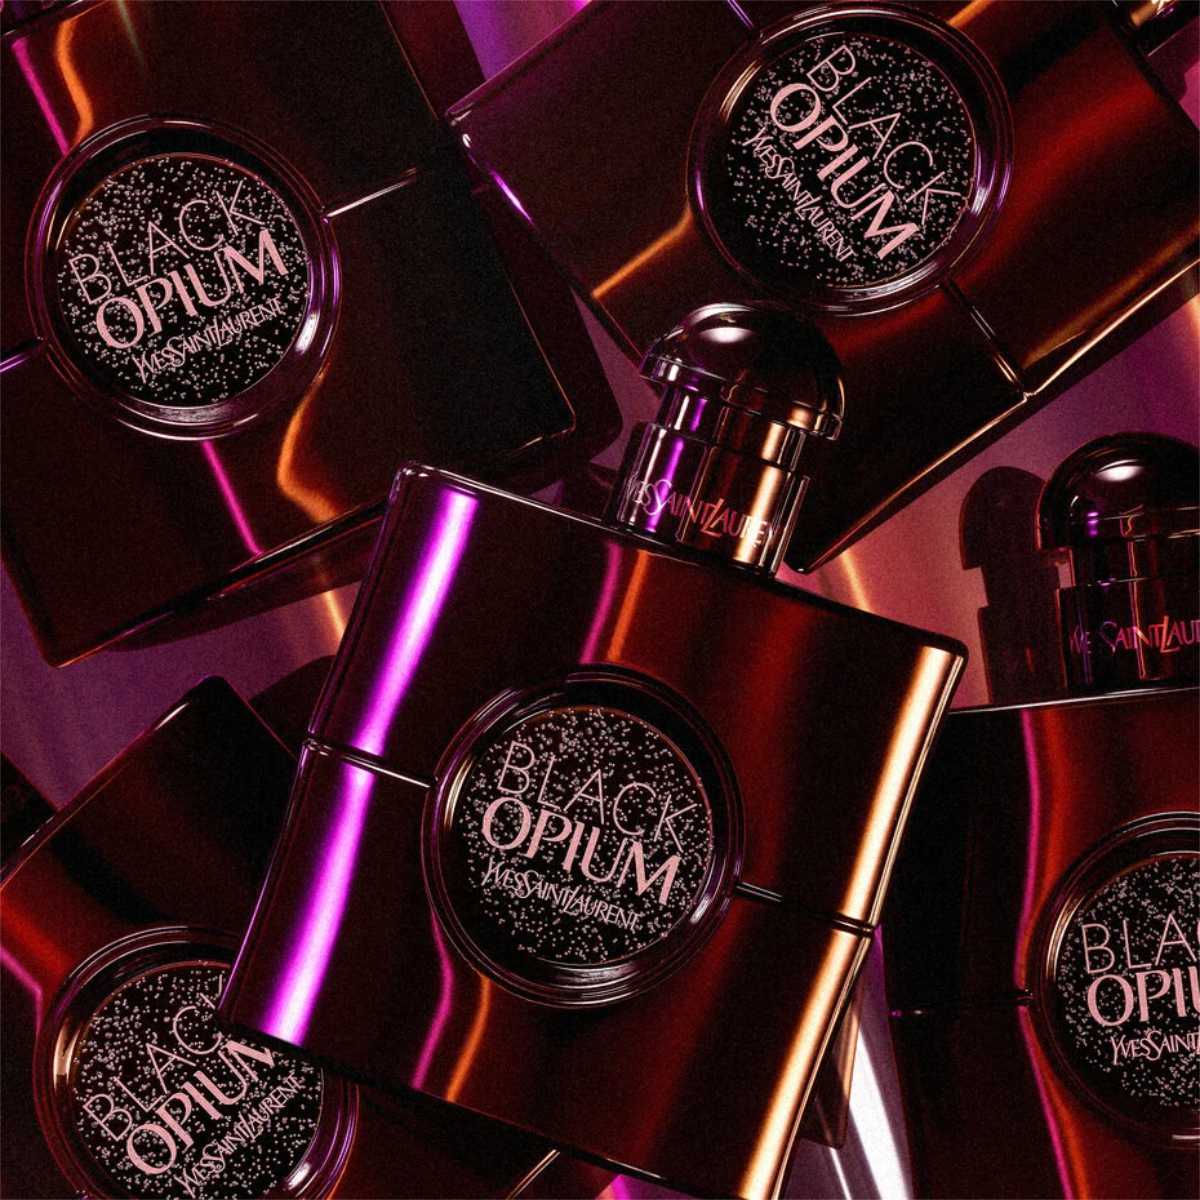 Yves Saint Laurent Black Opium Le Parfum | My Perfume Shop Australia